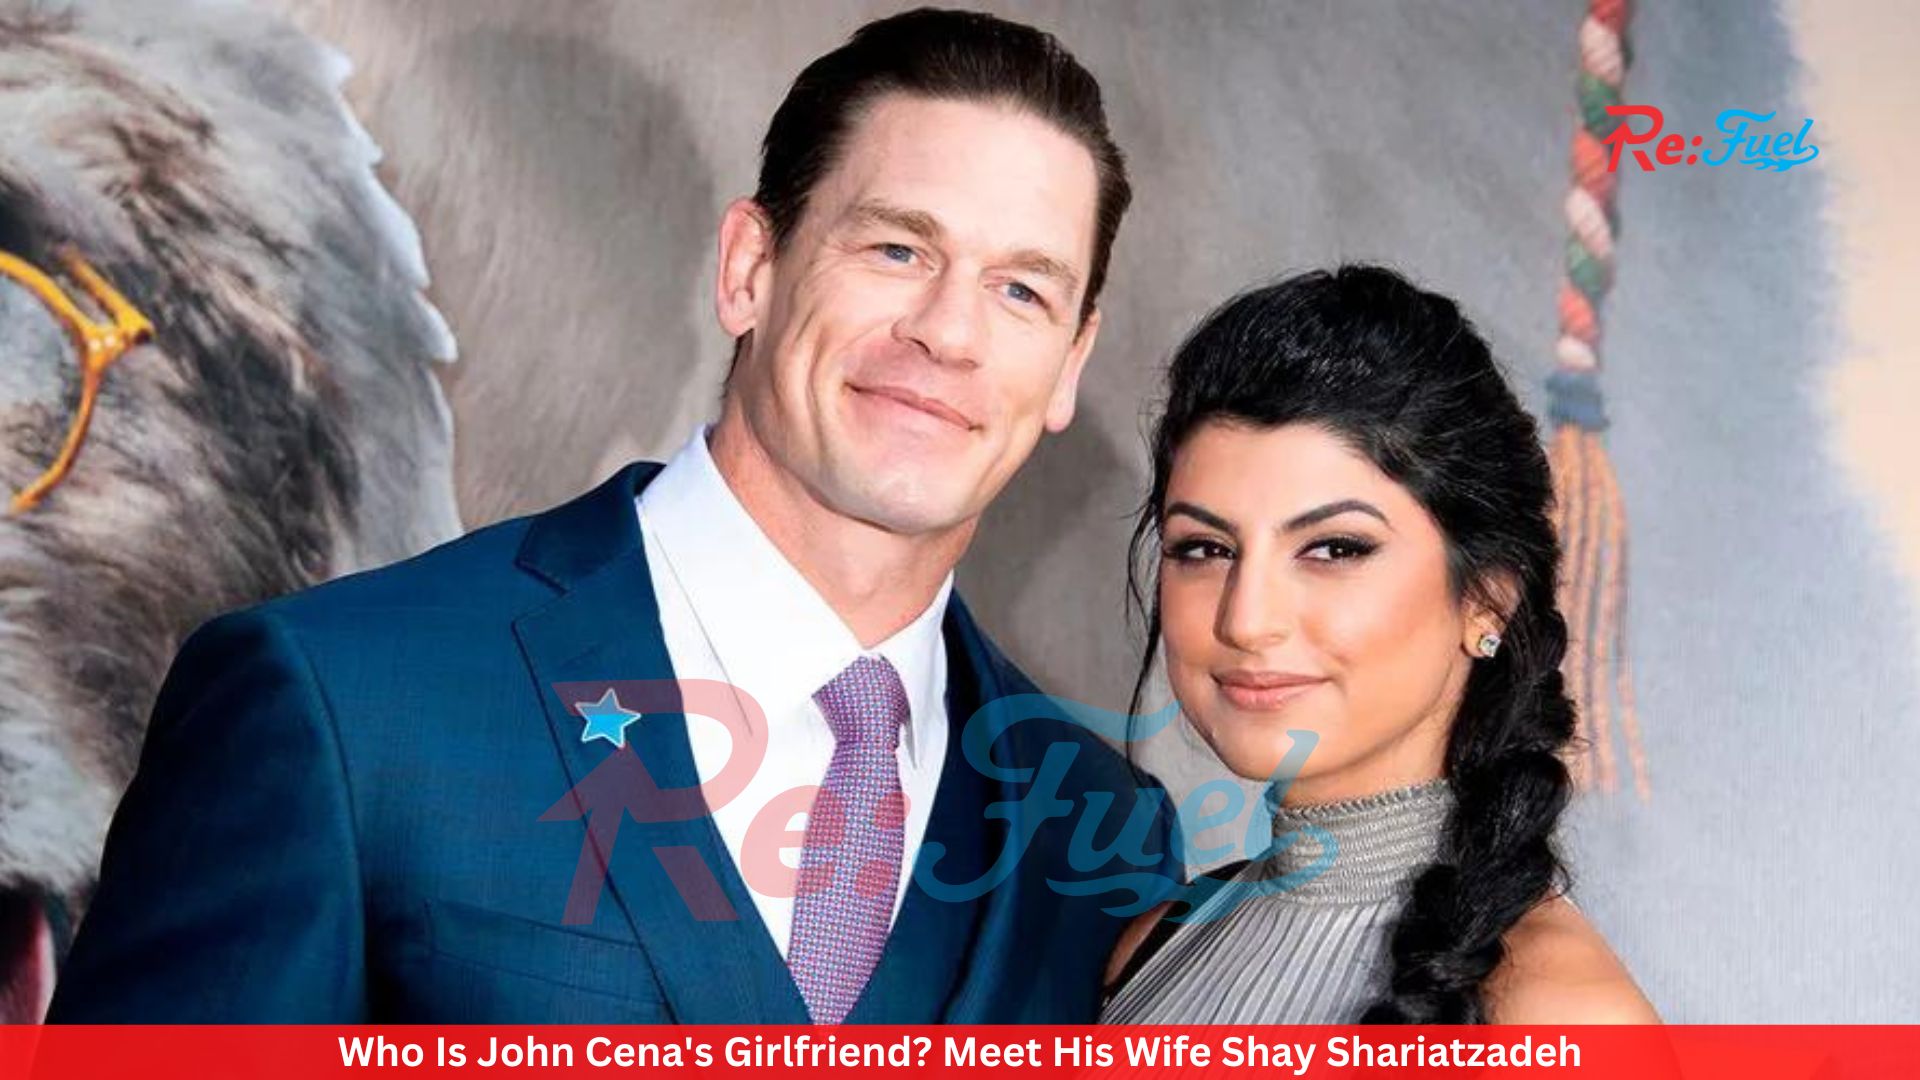 Who Is John Cena's Girlfriend? Meet His Wife Shay Shariatzadeh